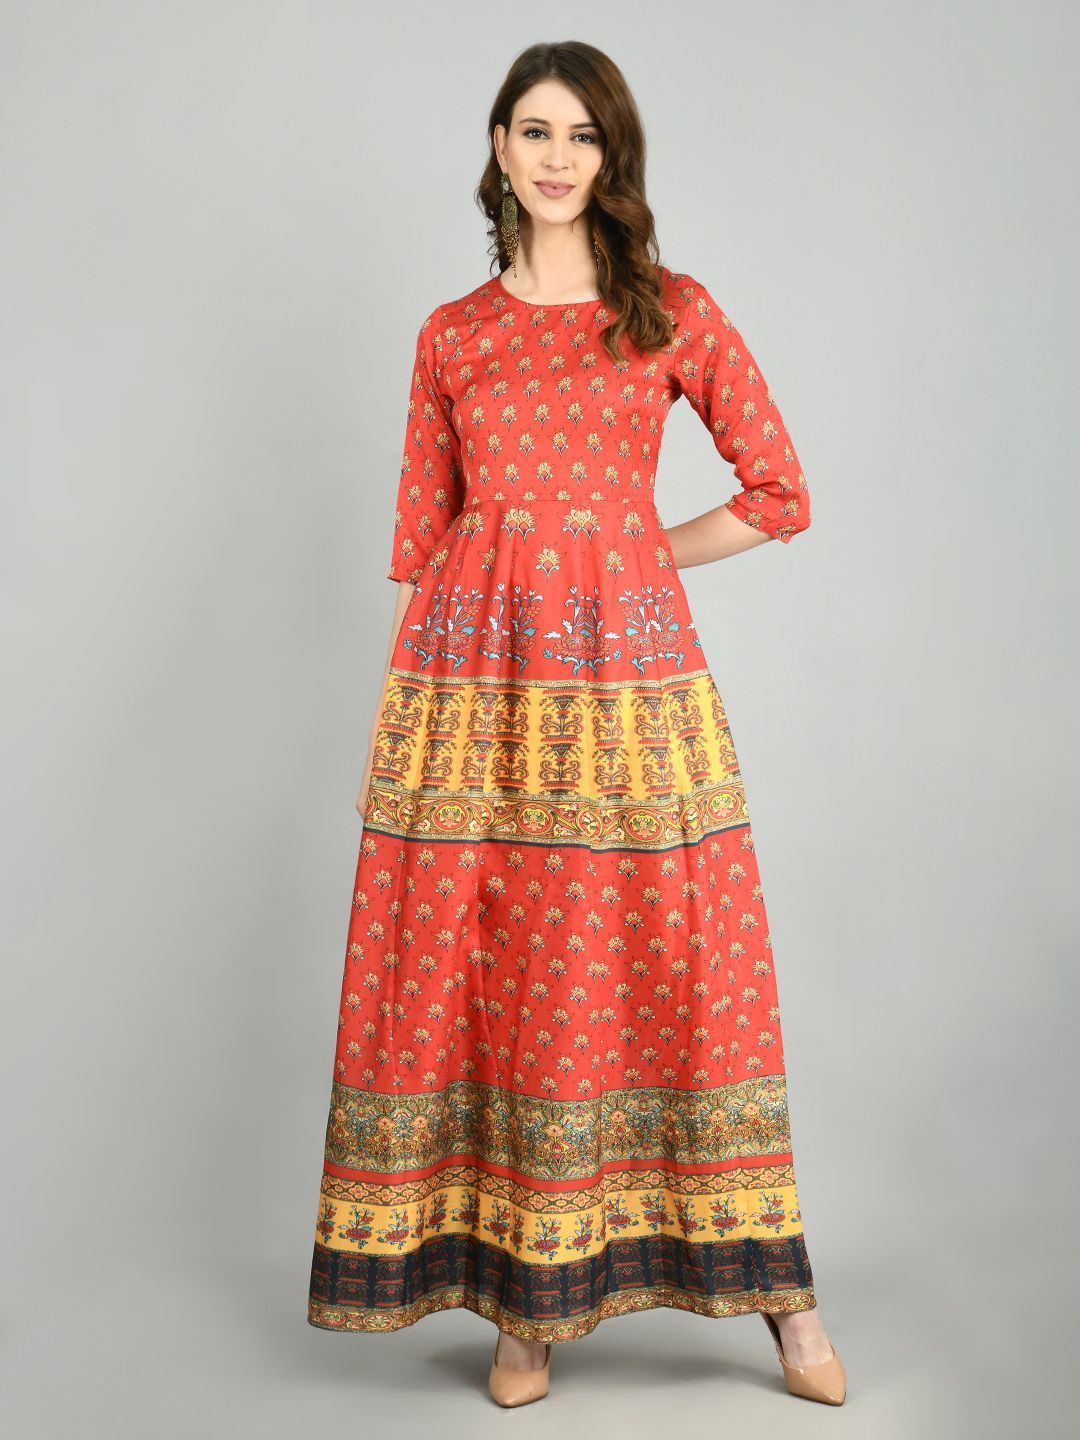 Women Red Cotton Printed Dress by Myshka (1 Pc Set)